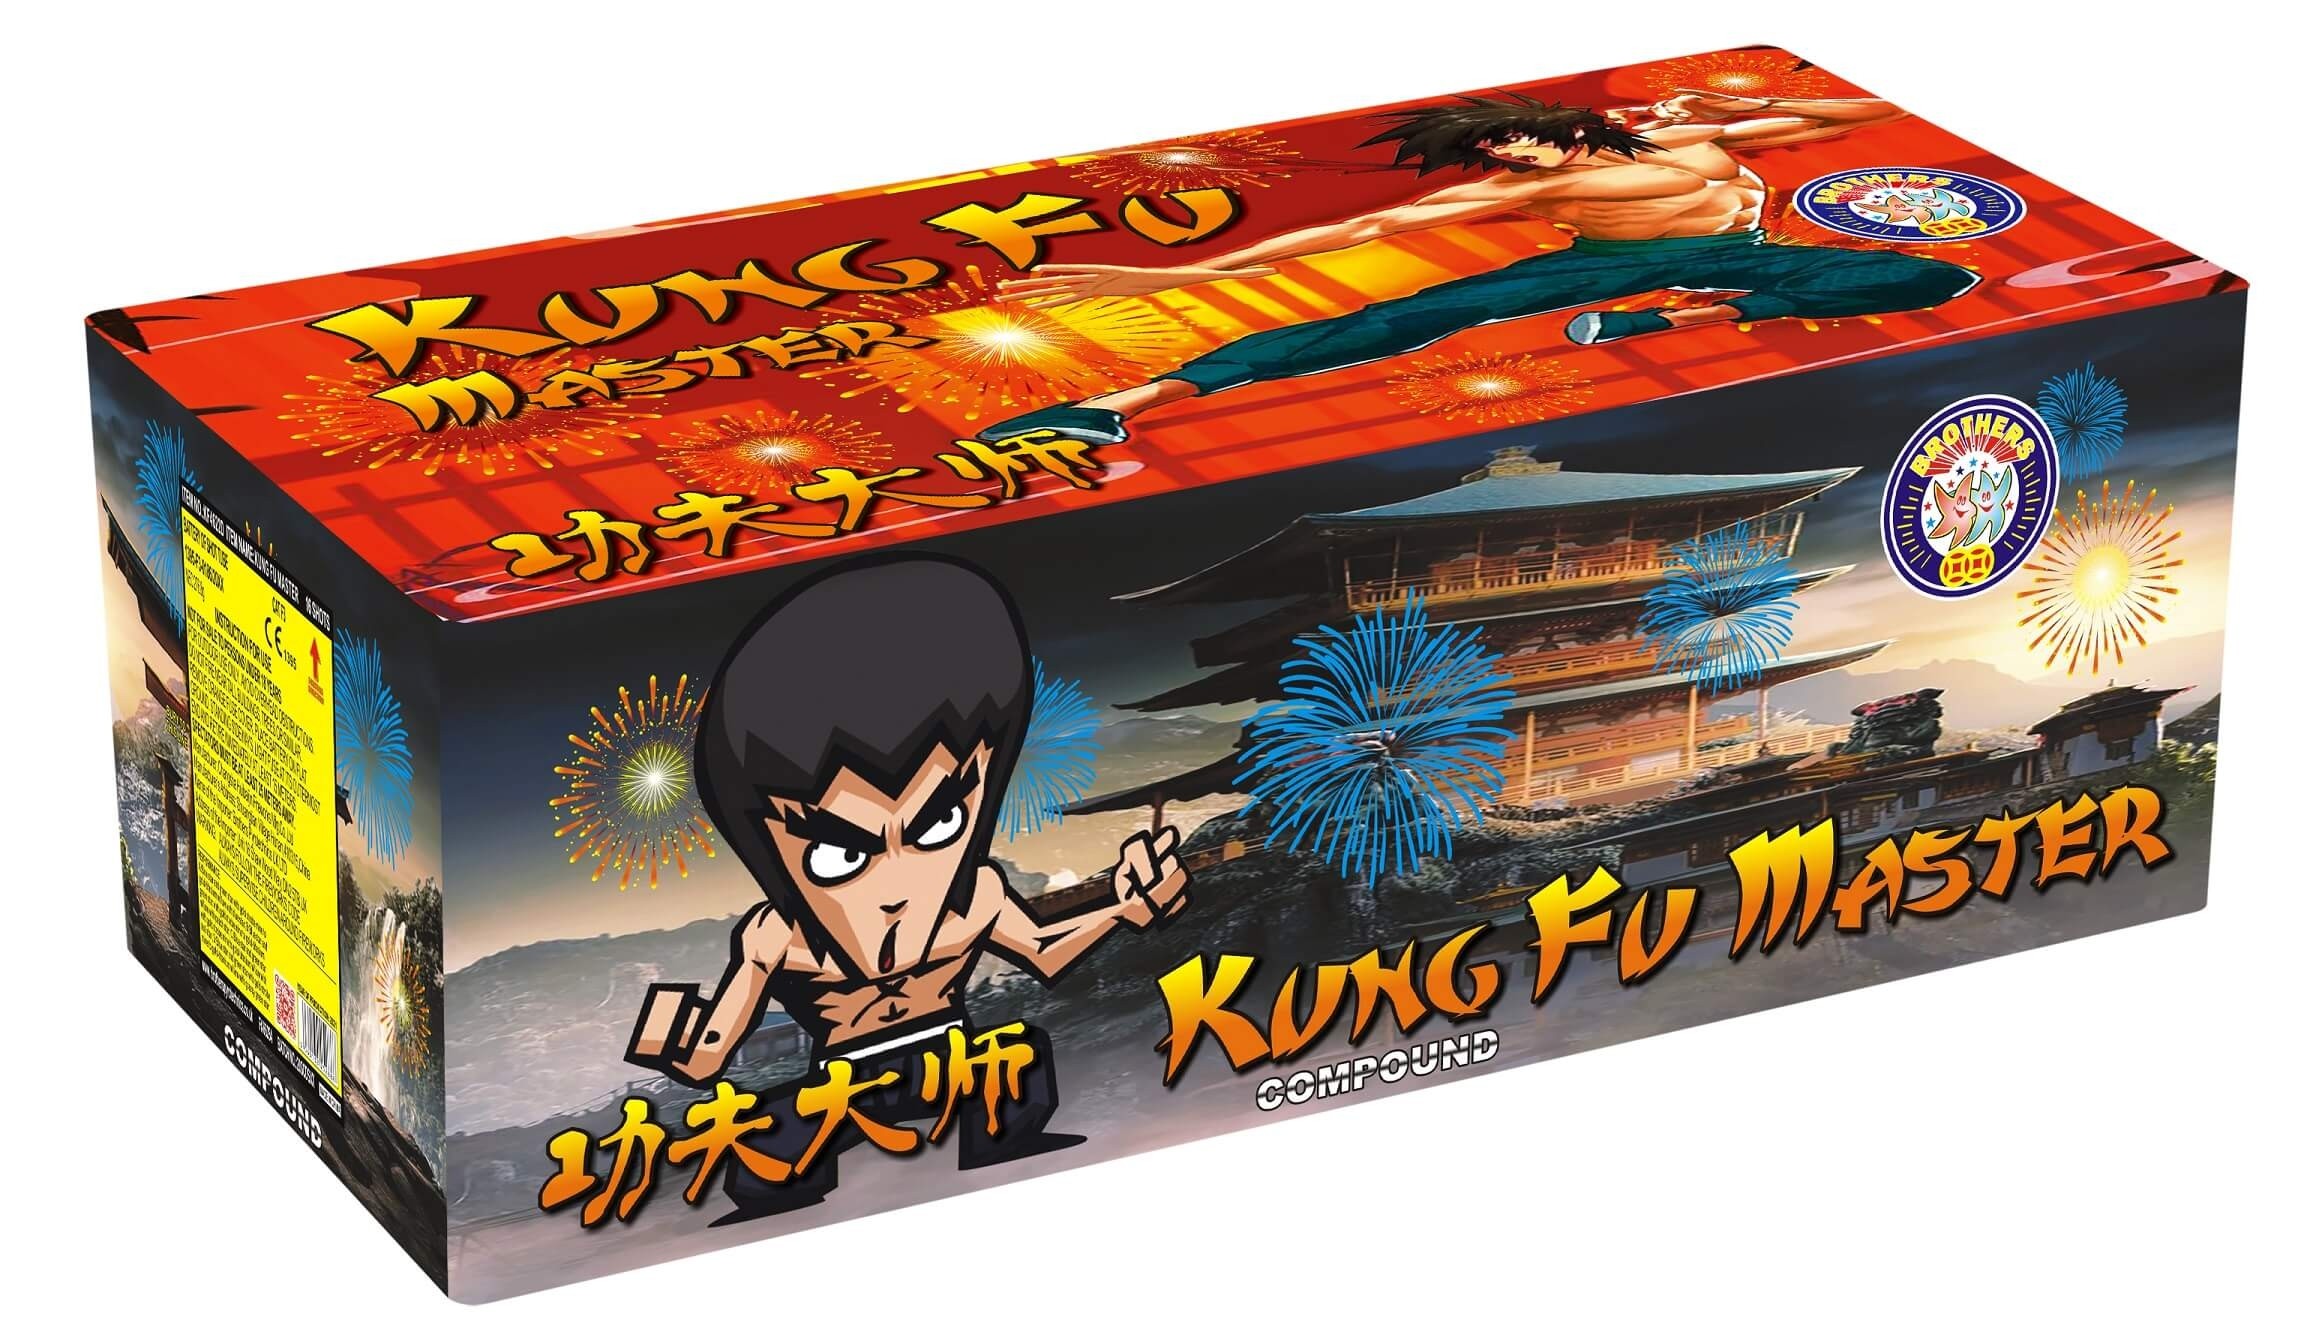 Kung Fu Warrior Firework Barrage by Skycrafter Fireworks